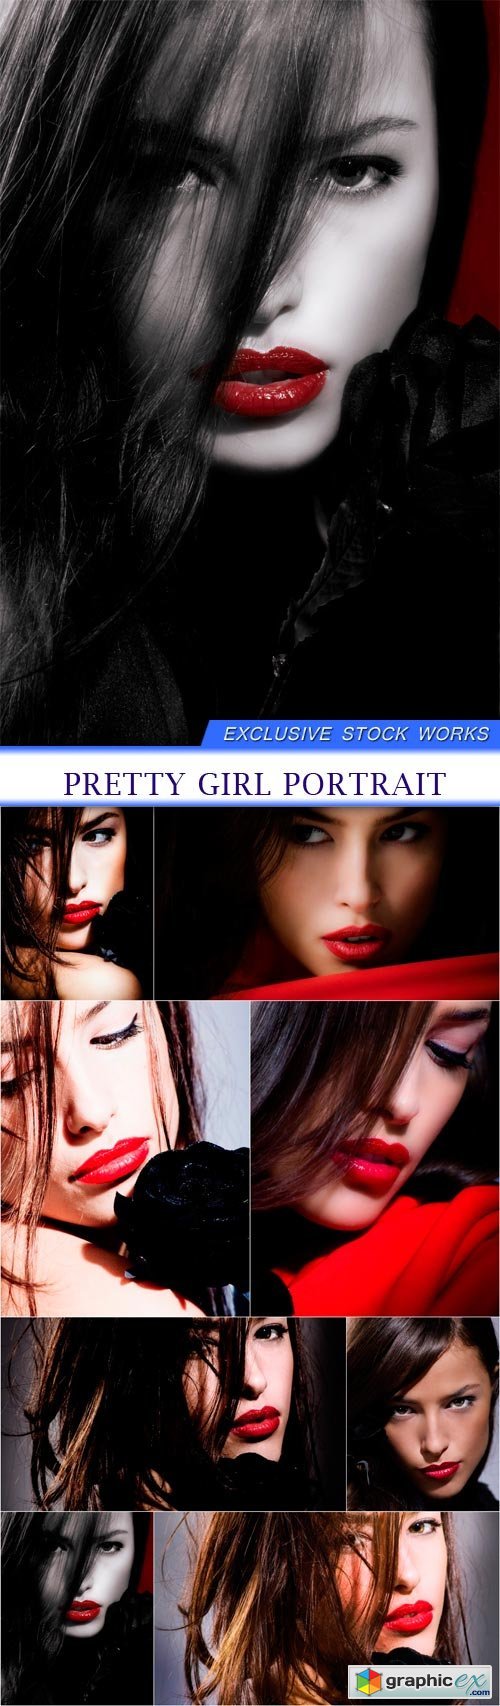 Pretty girl portrait 8X JPEG